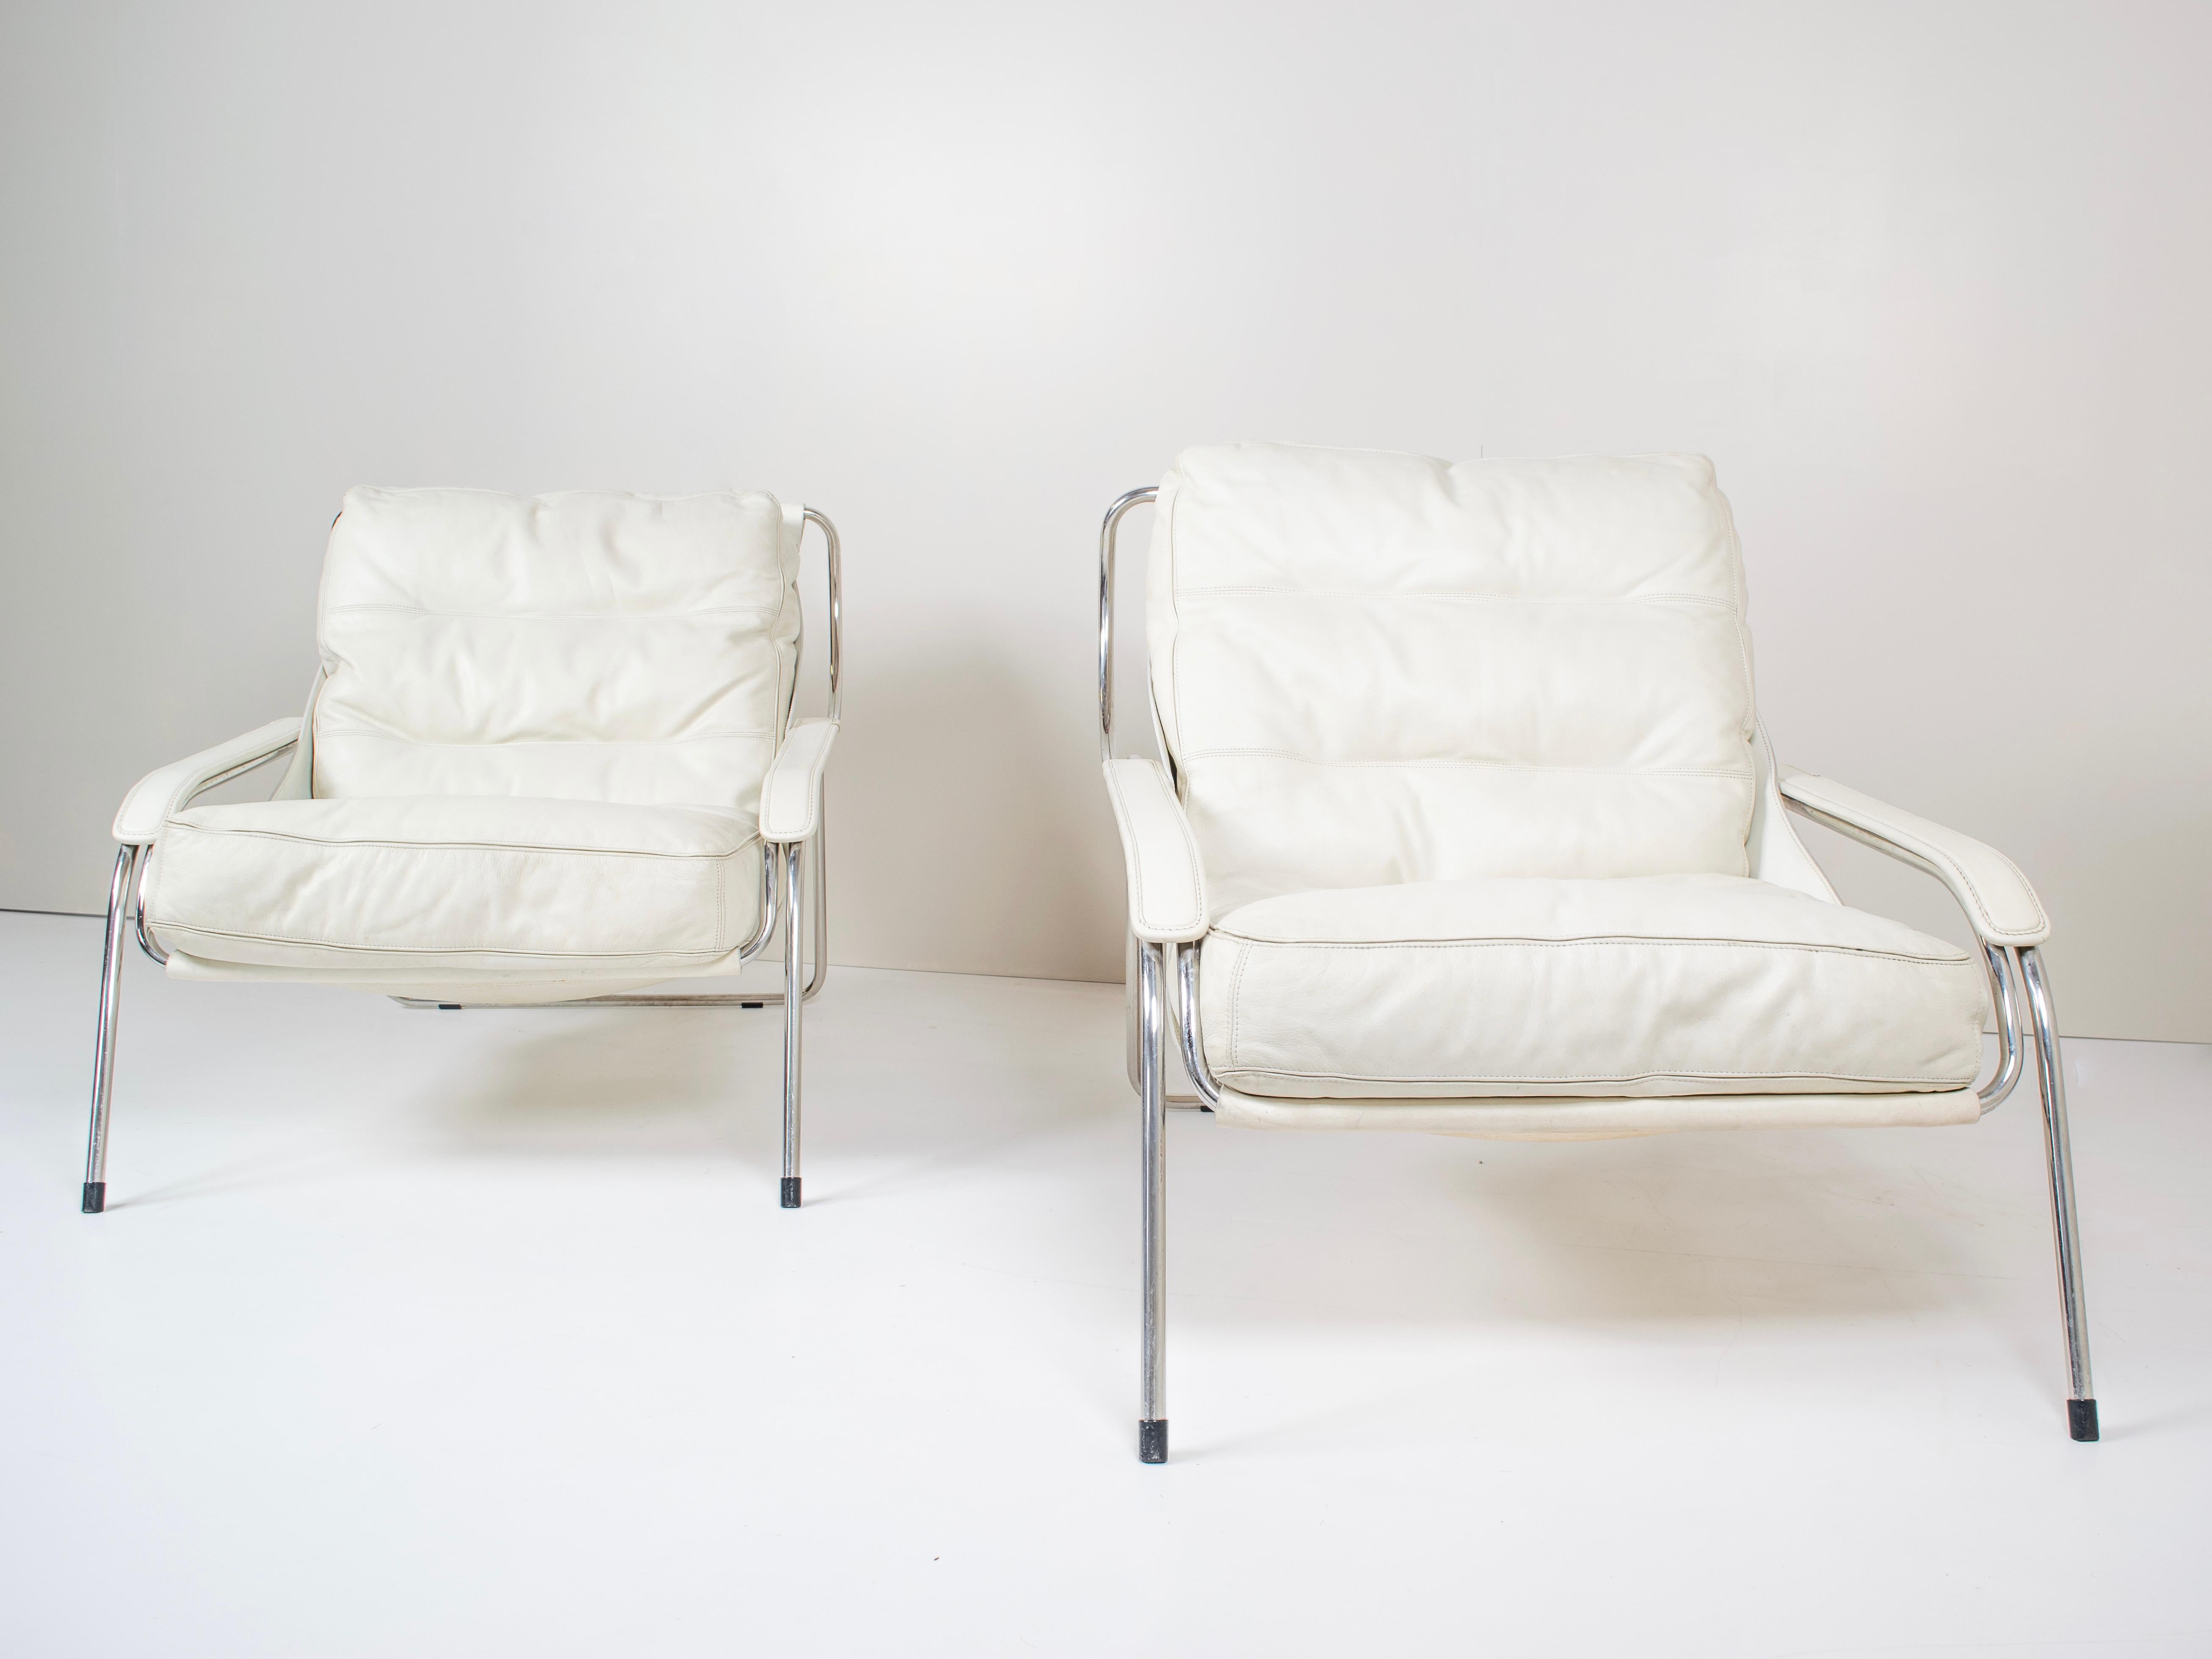 Italian Pair of Marco Zanuso Maggiolina White Leather Chairs by Zanotta, Italy, 1947